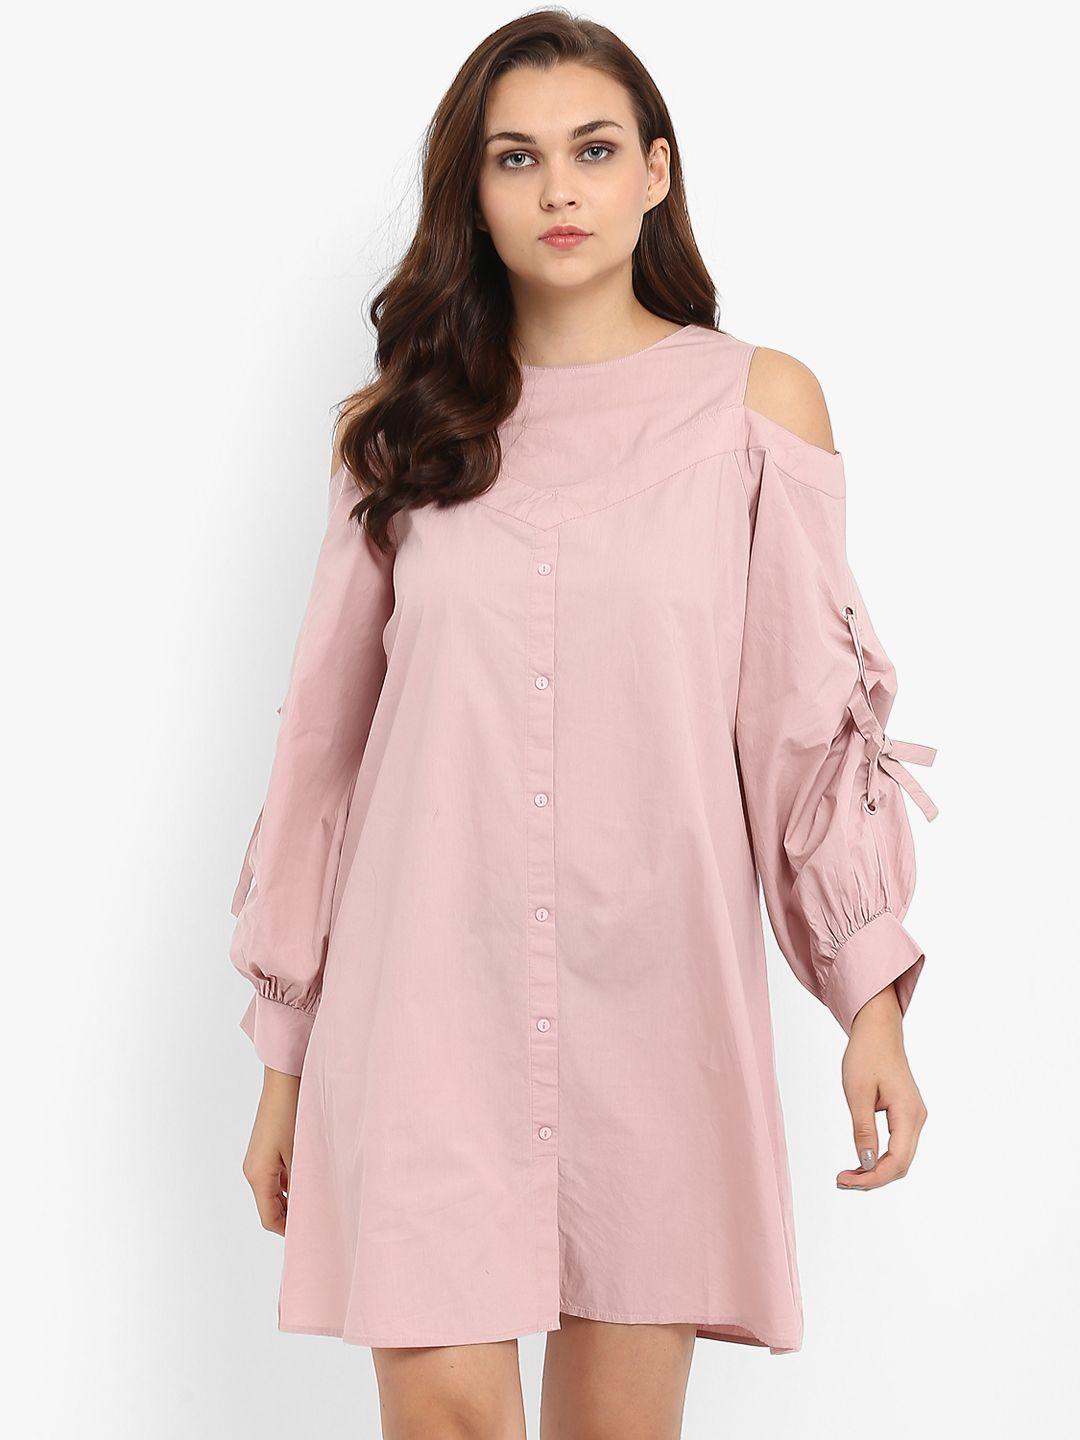 athah-women-pink-a-line-cotton-dress